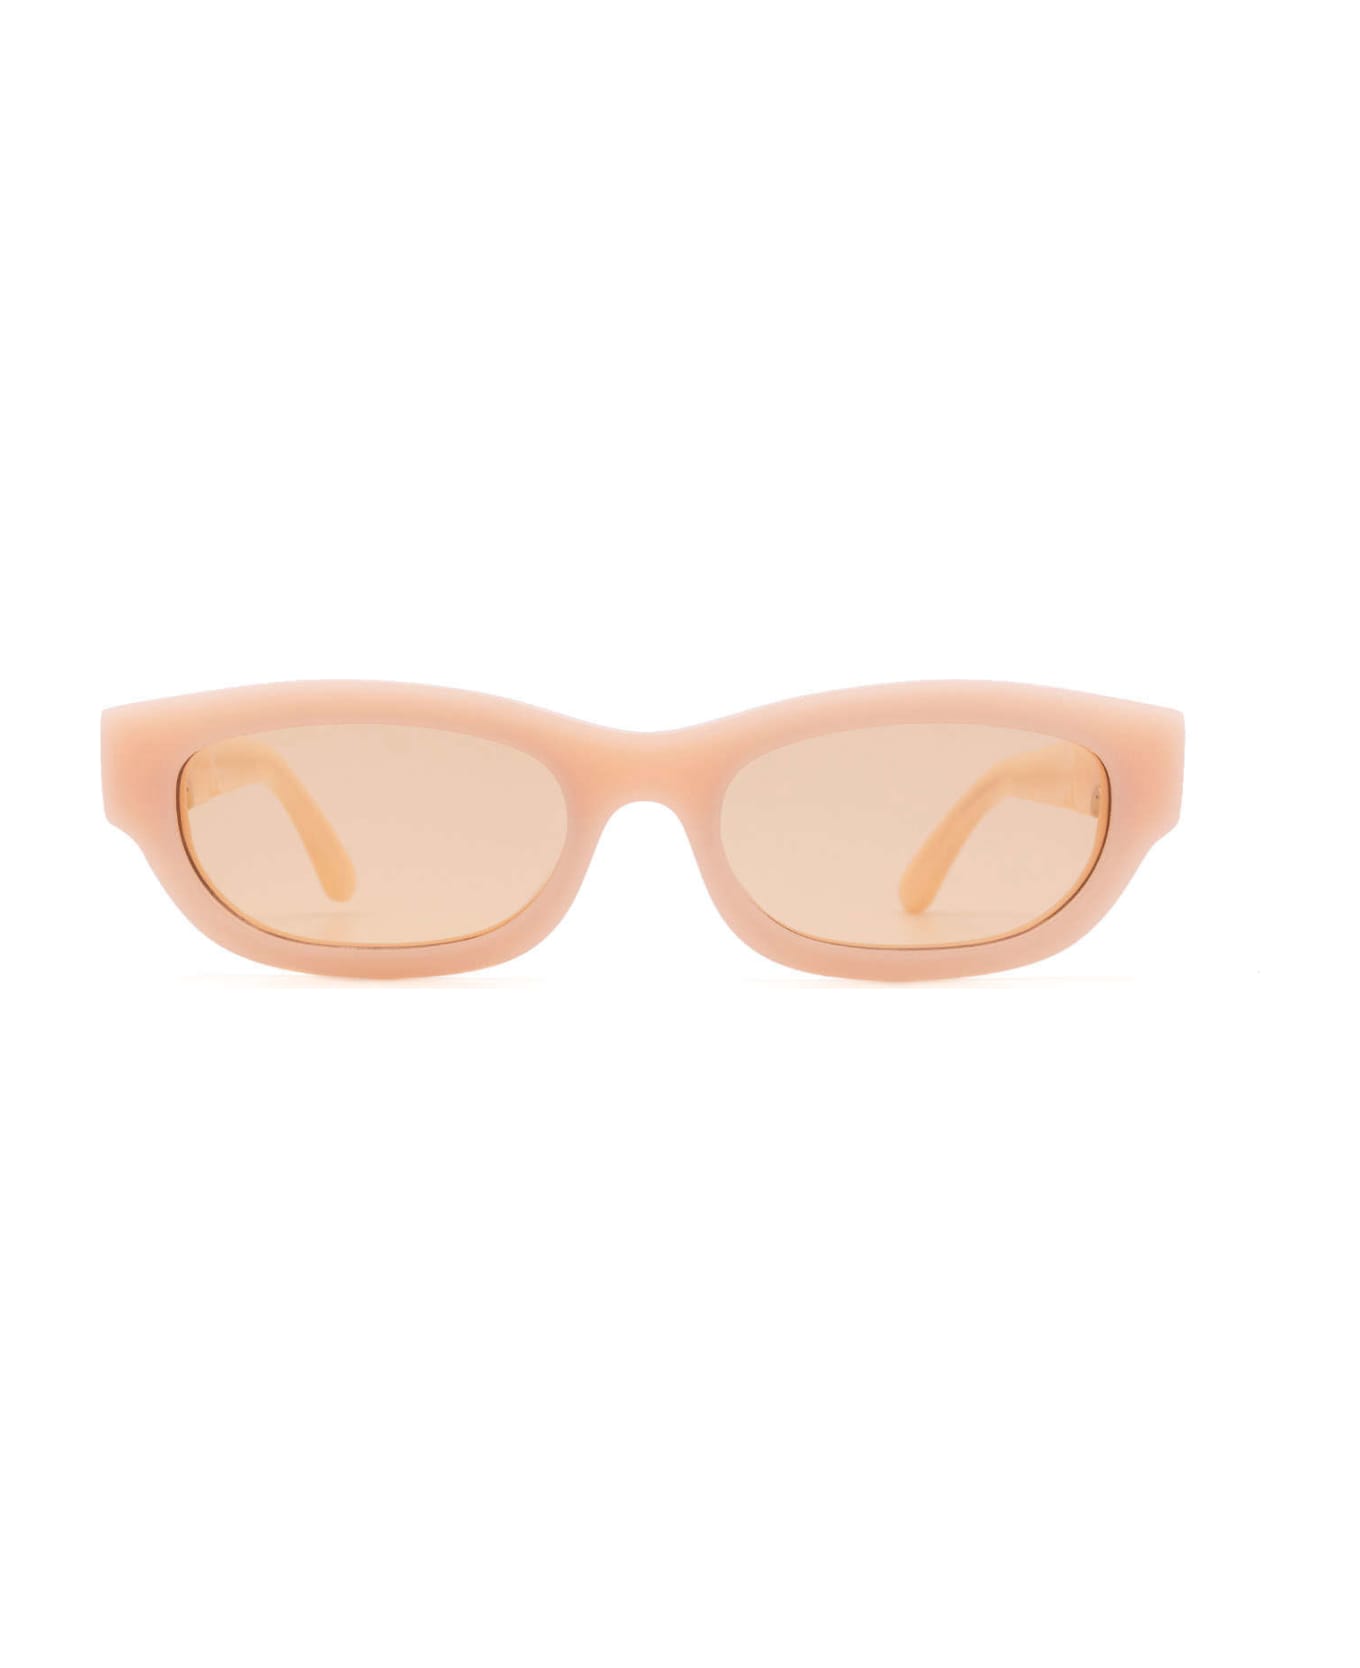 Huma Tojo Pink Sunglasses - Pink サングラス